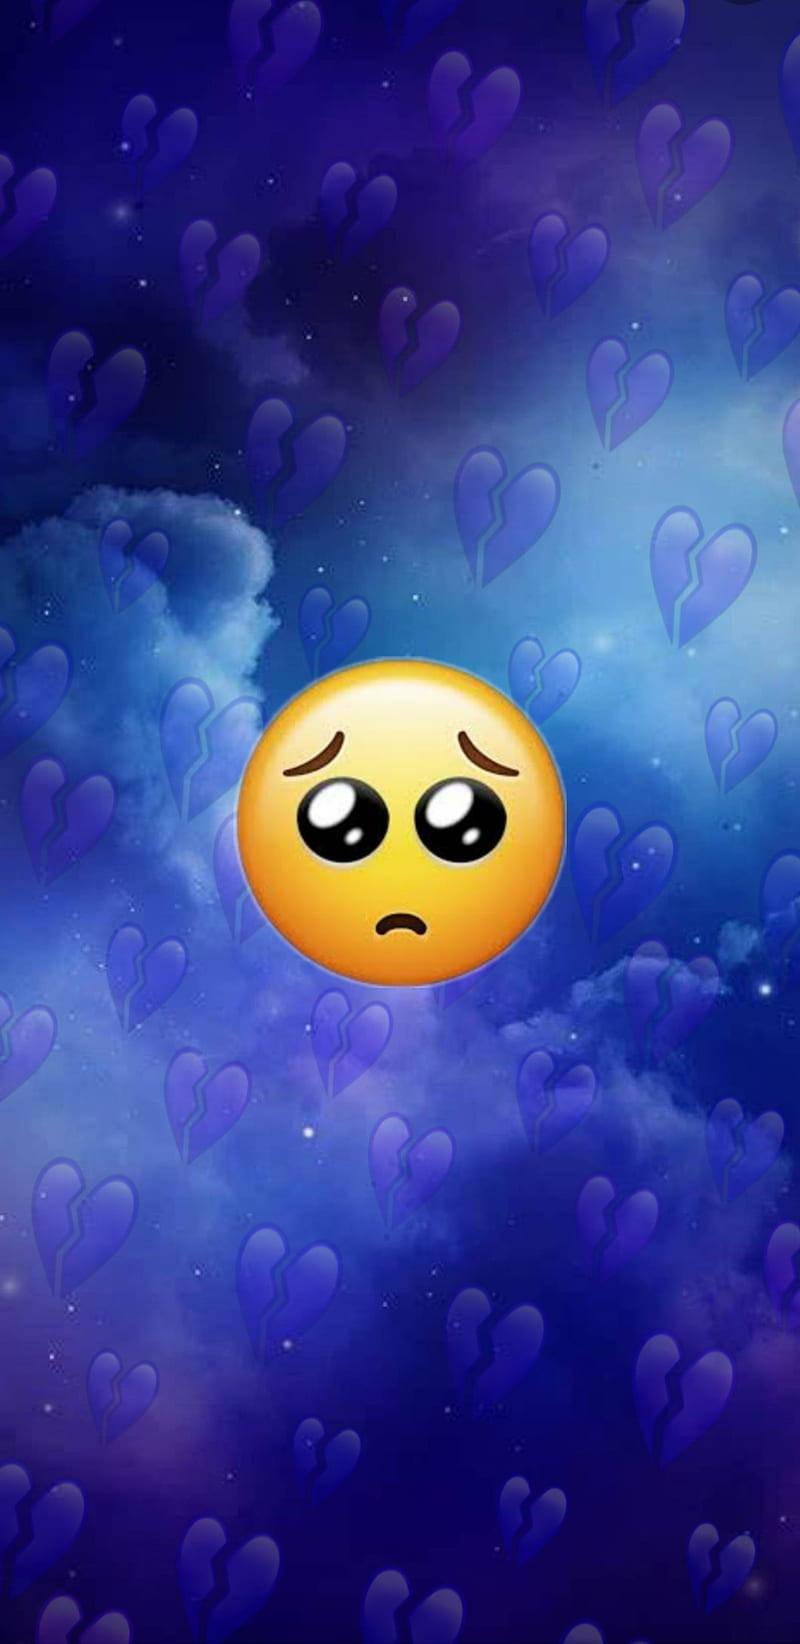 Sad Emoji With Broken Hearts In The Sky Background